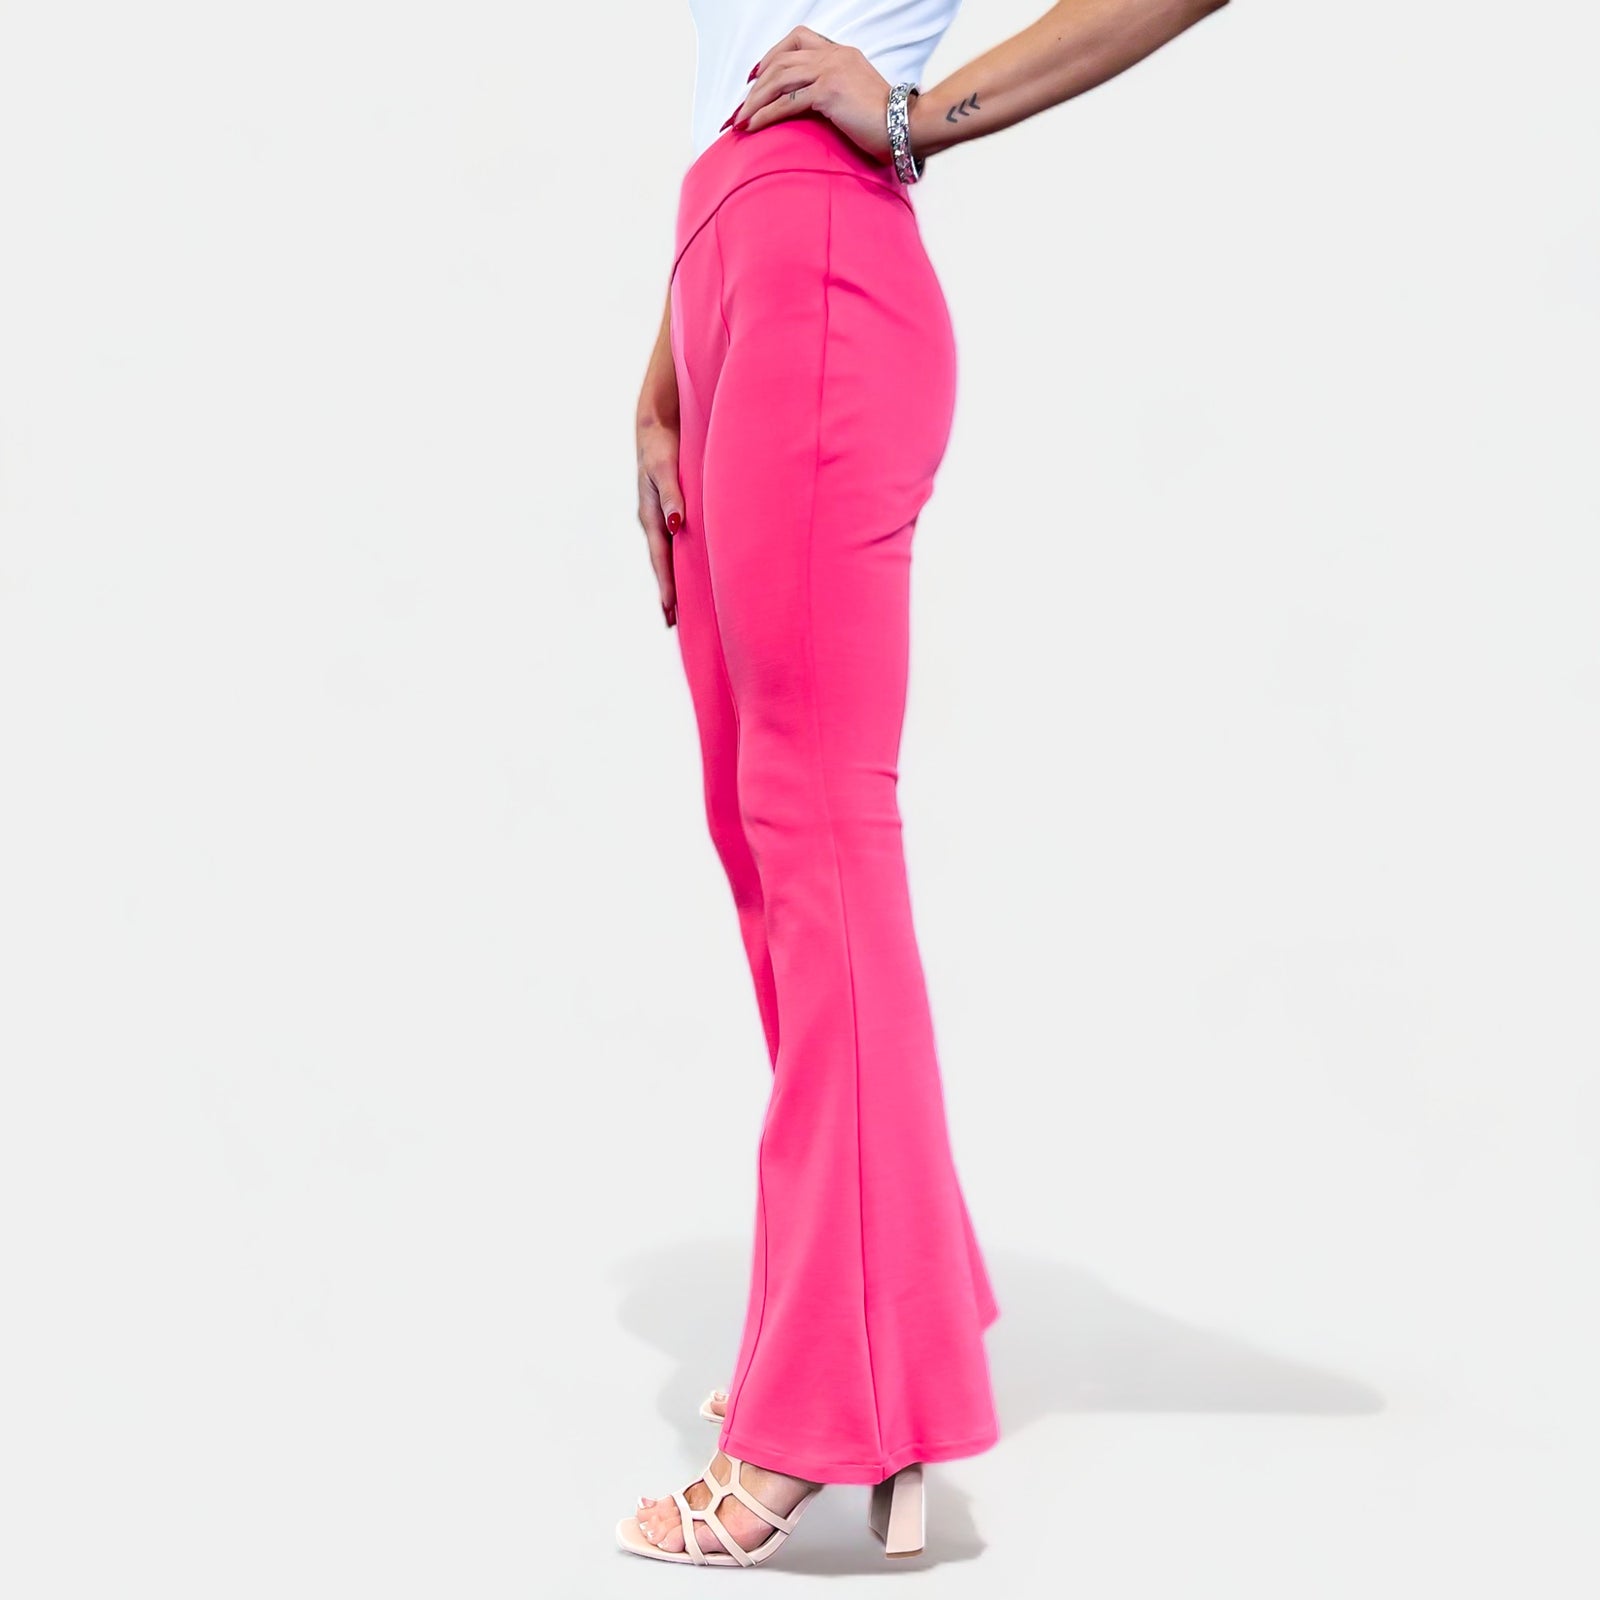 Pink Flare Pants - Shop on Pinterest